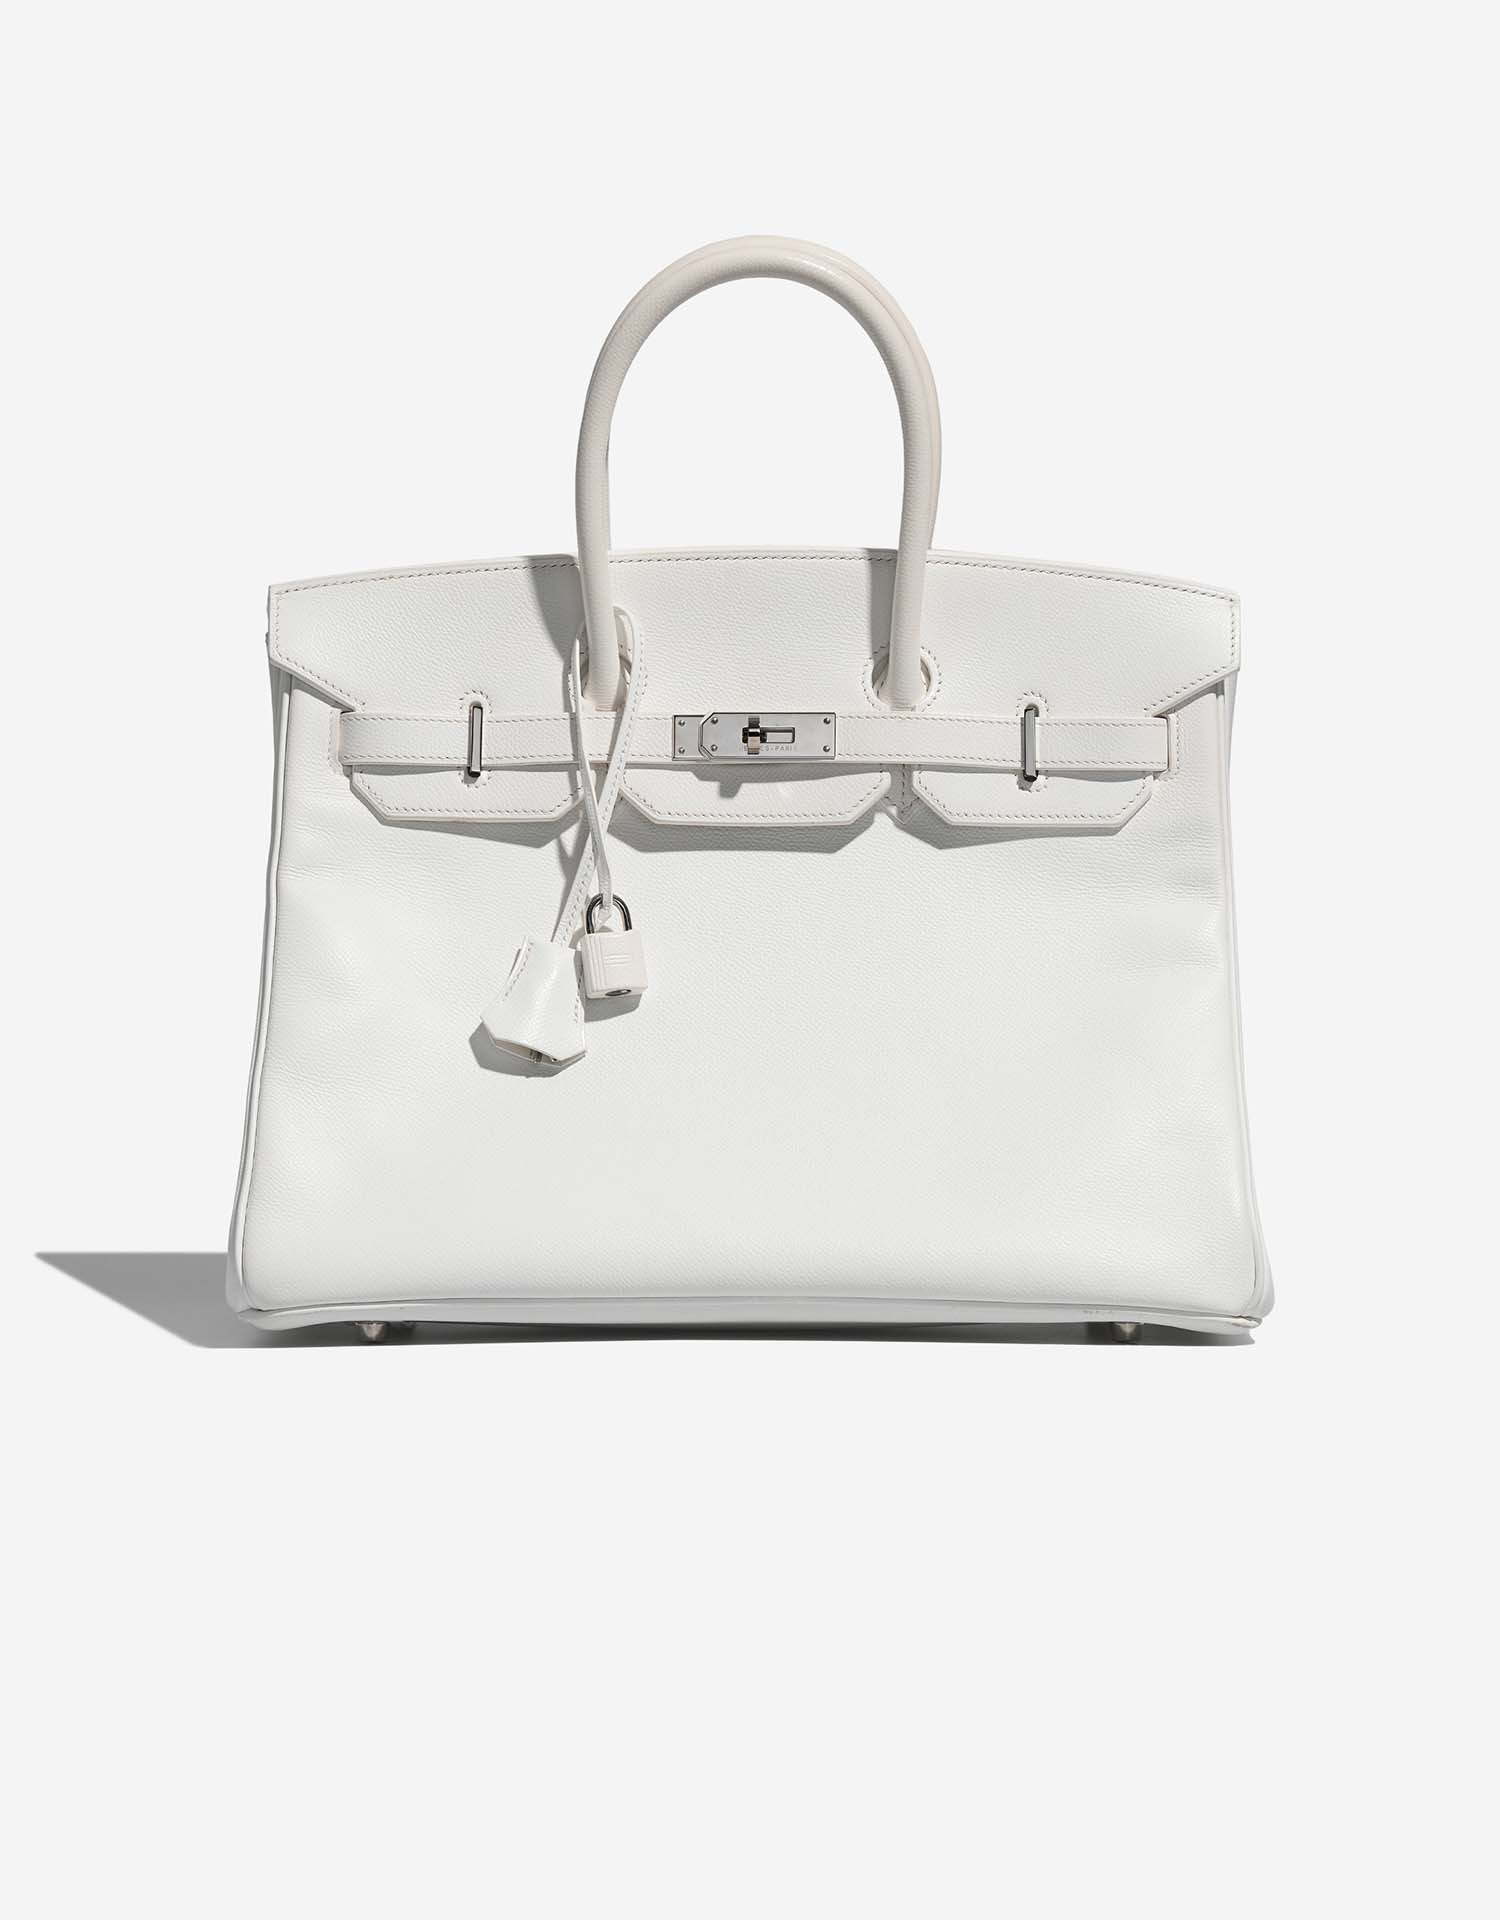 Hermes Birkin bag 35 White Epsom leather Silver hardware